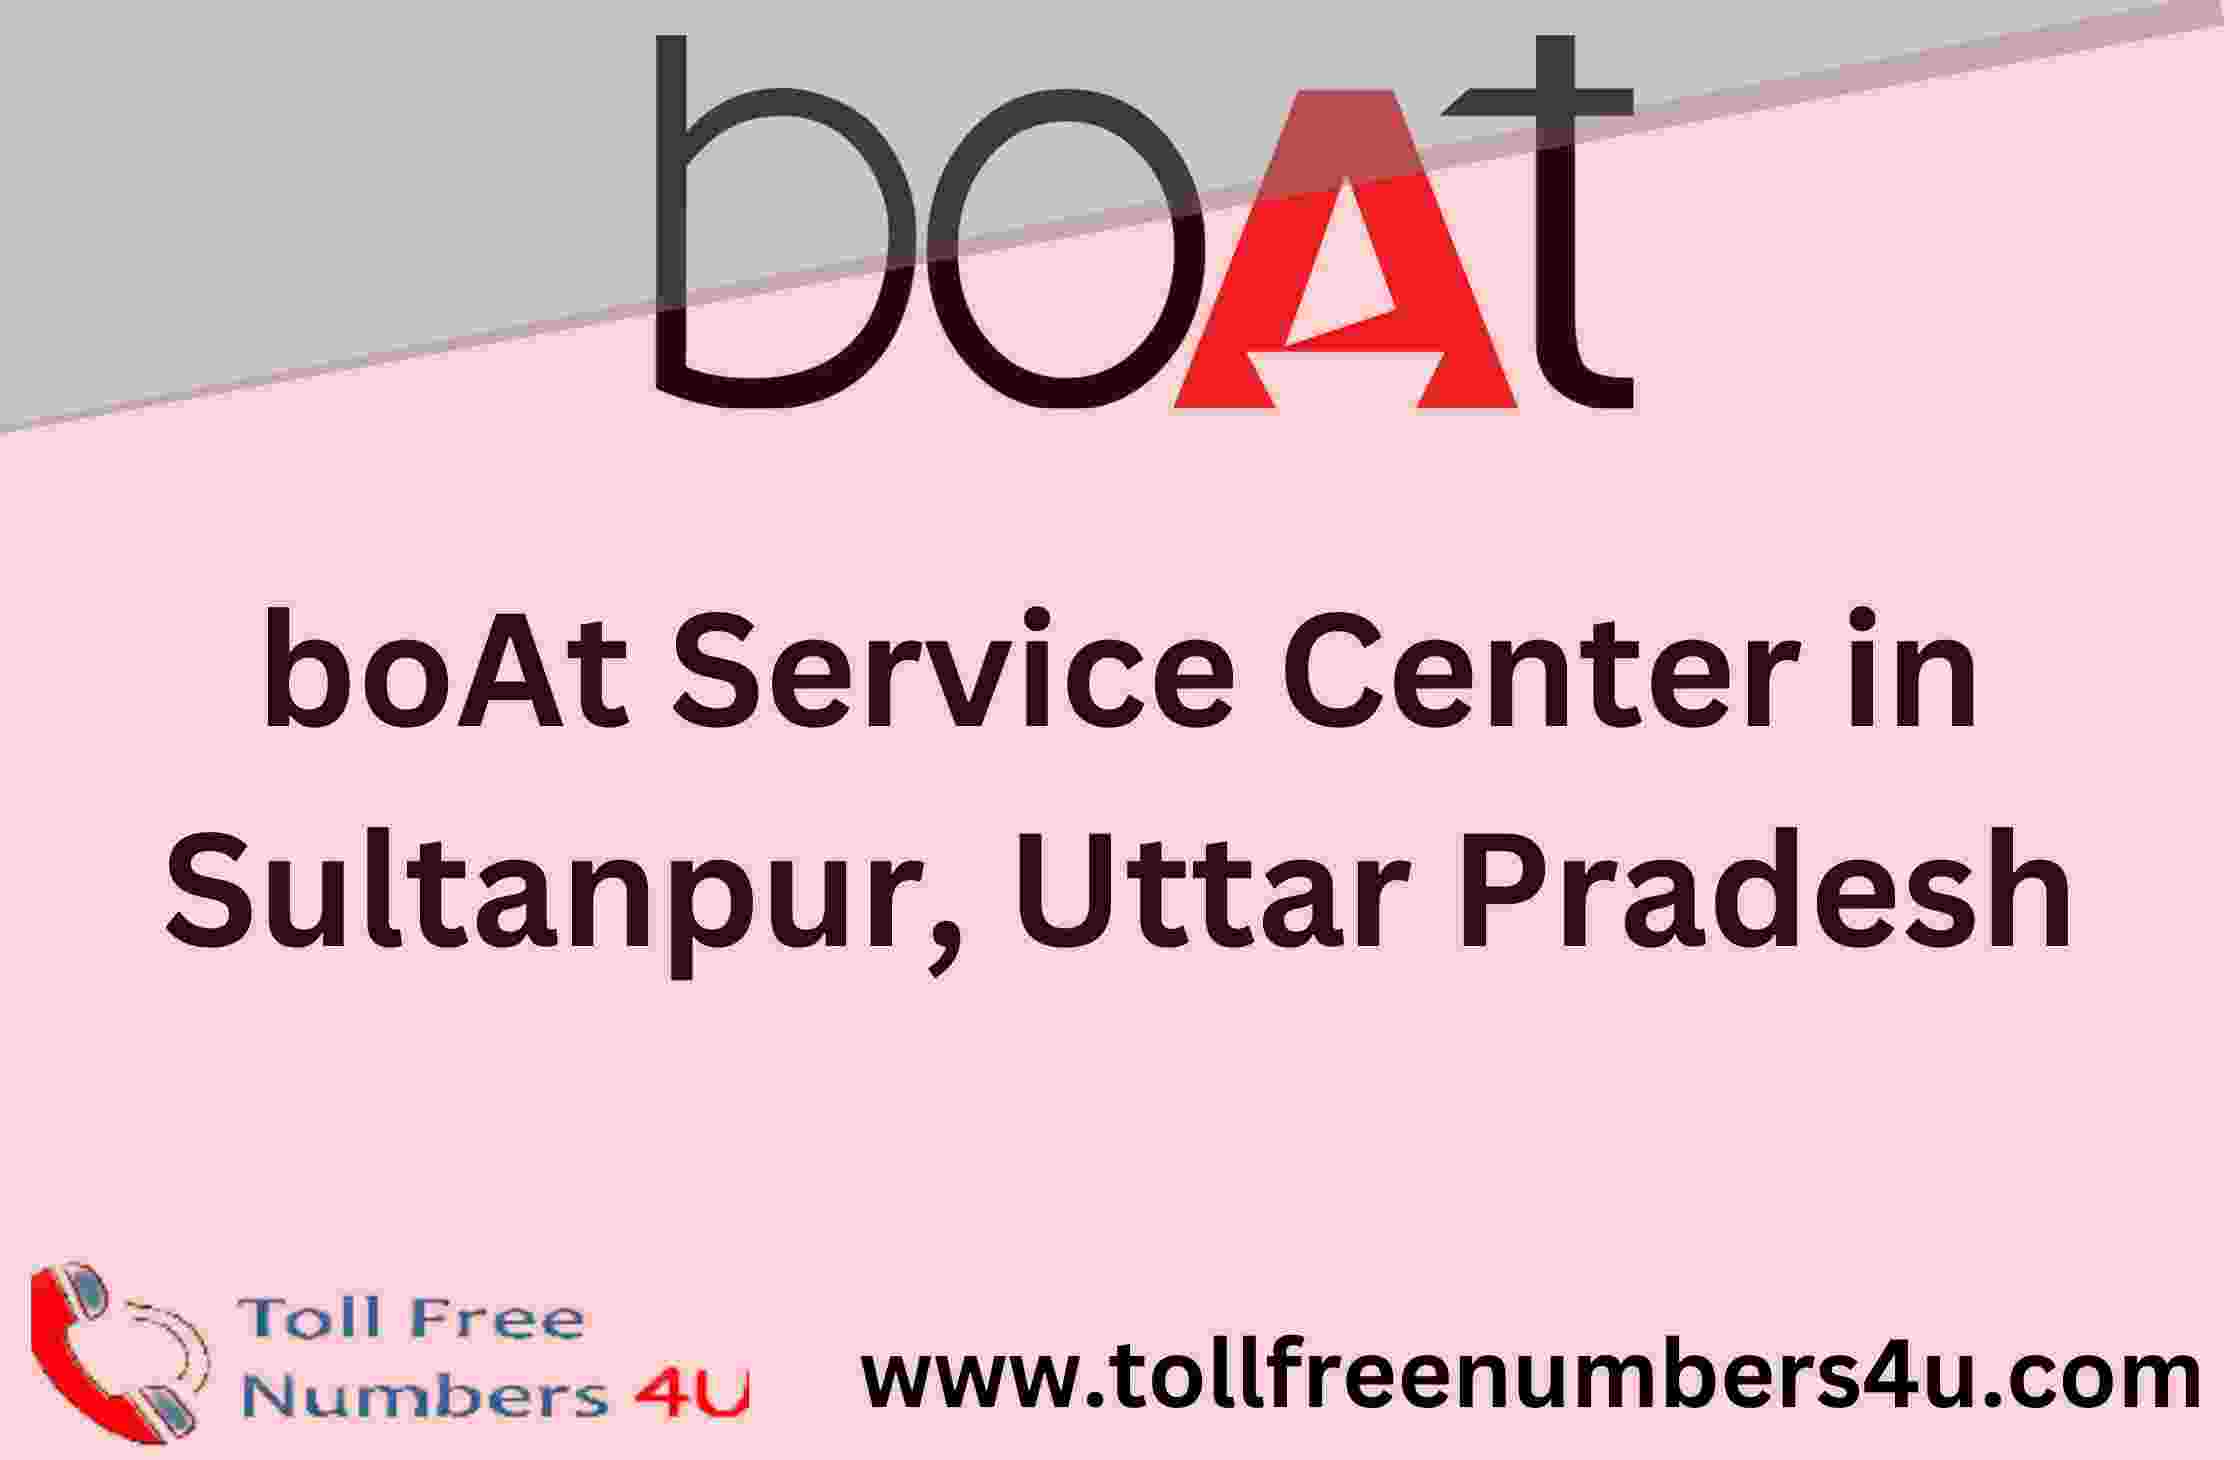 boAt Service Center in Sultanpur - TollFreeNumbers4u